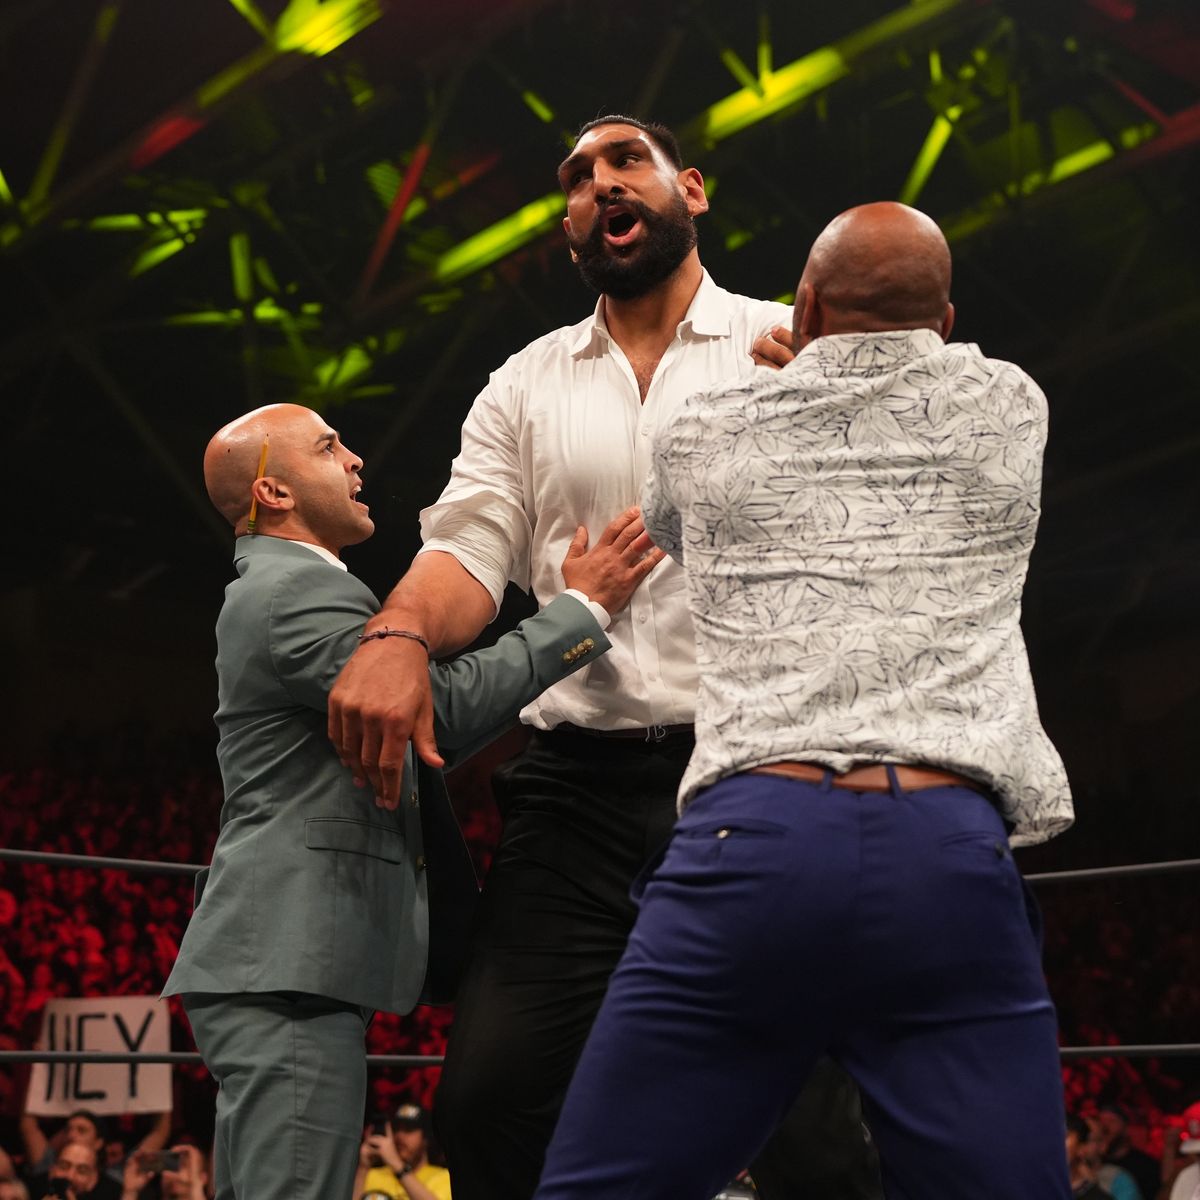 Who is new AEW wrestler Satnam Singh?